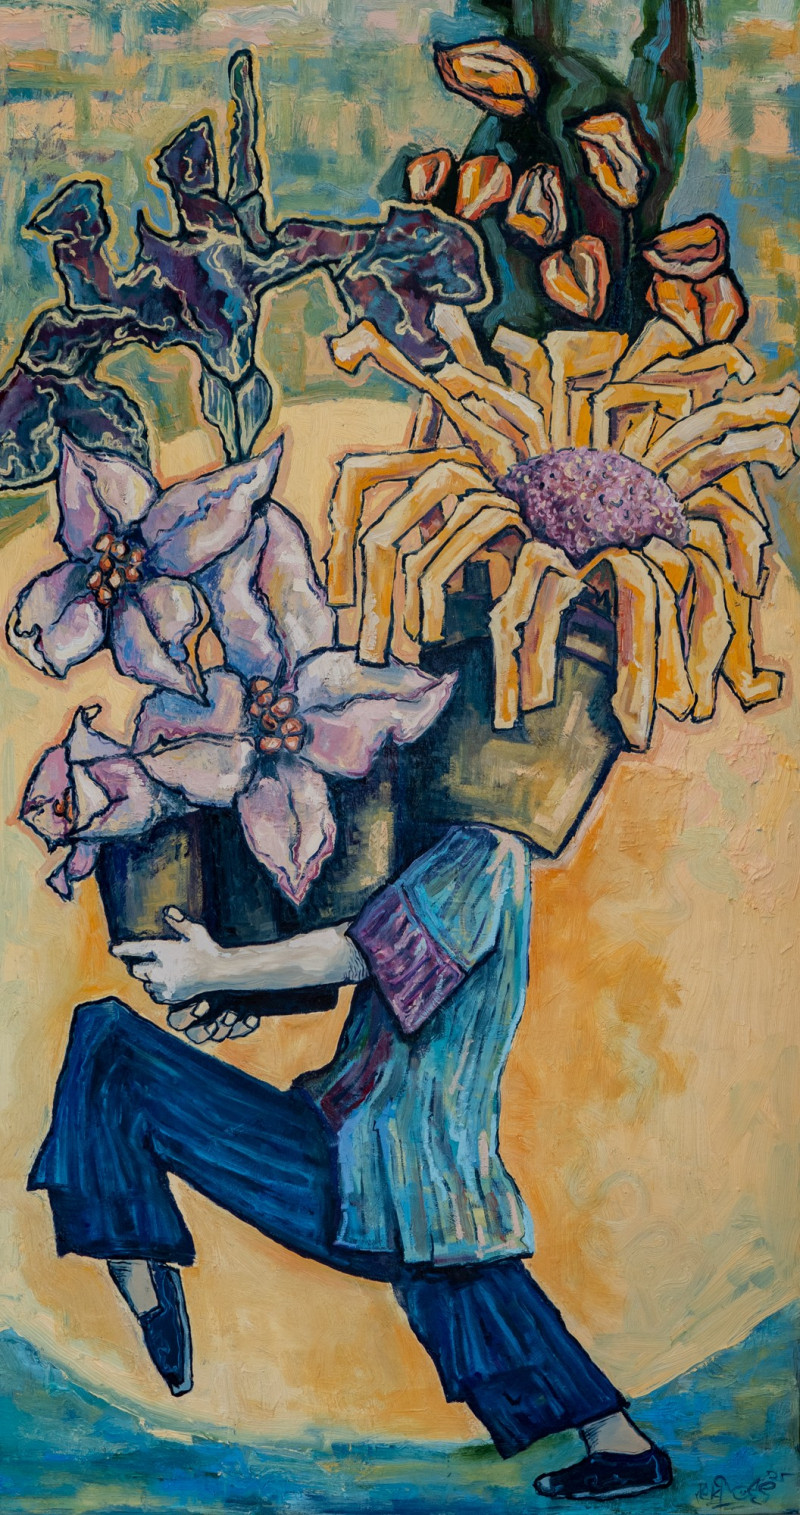 Mindaugas Pupelis tapytas paveikslas Obsesija, Išlaisvinta fantazija , paveikslai internetu